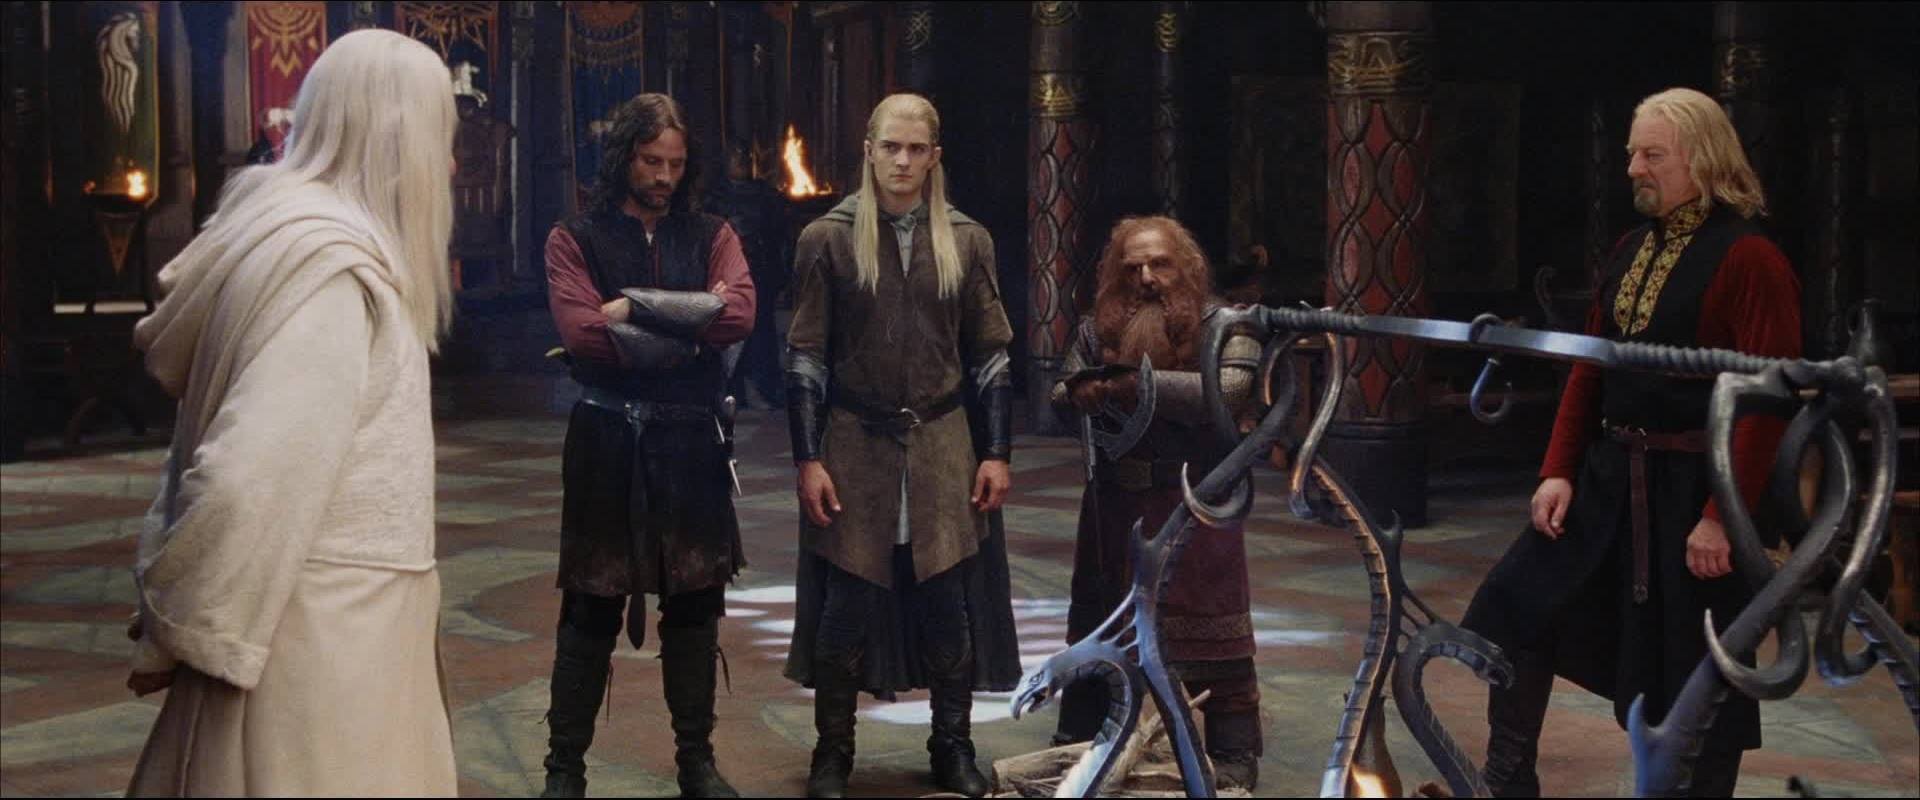 Viggo Mortensen, Ian McKellen, Orlando Bloom, Bernard Hill, and John Rhys-Davies in The Lord of the Rings: The Return of the King (2003)